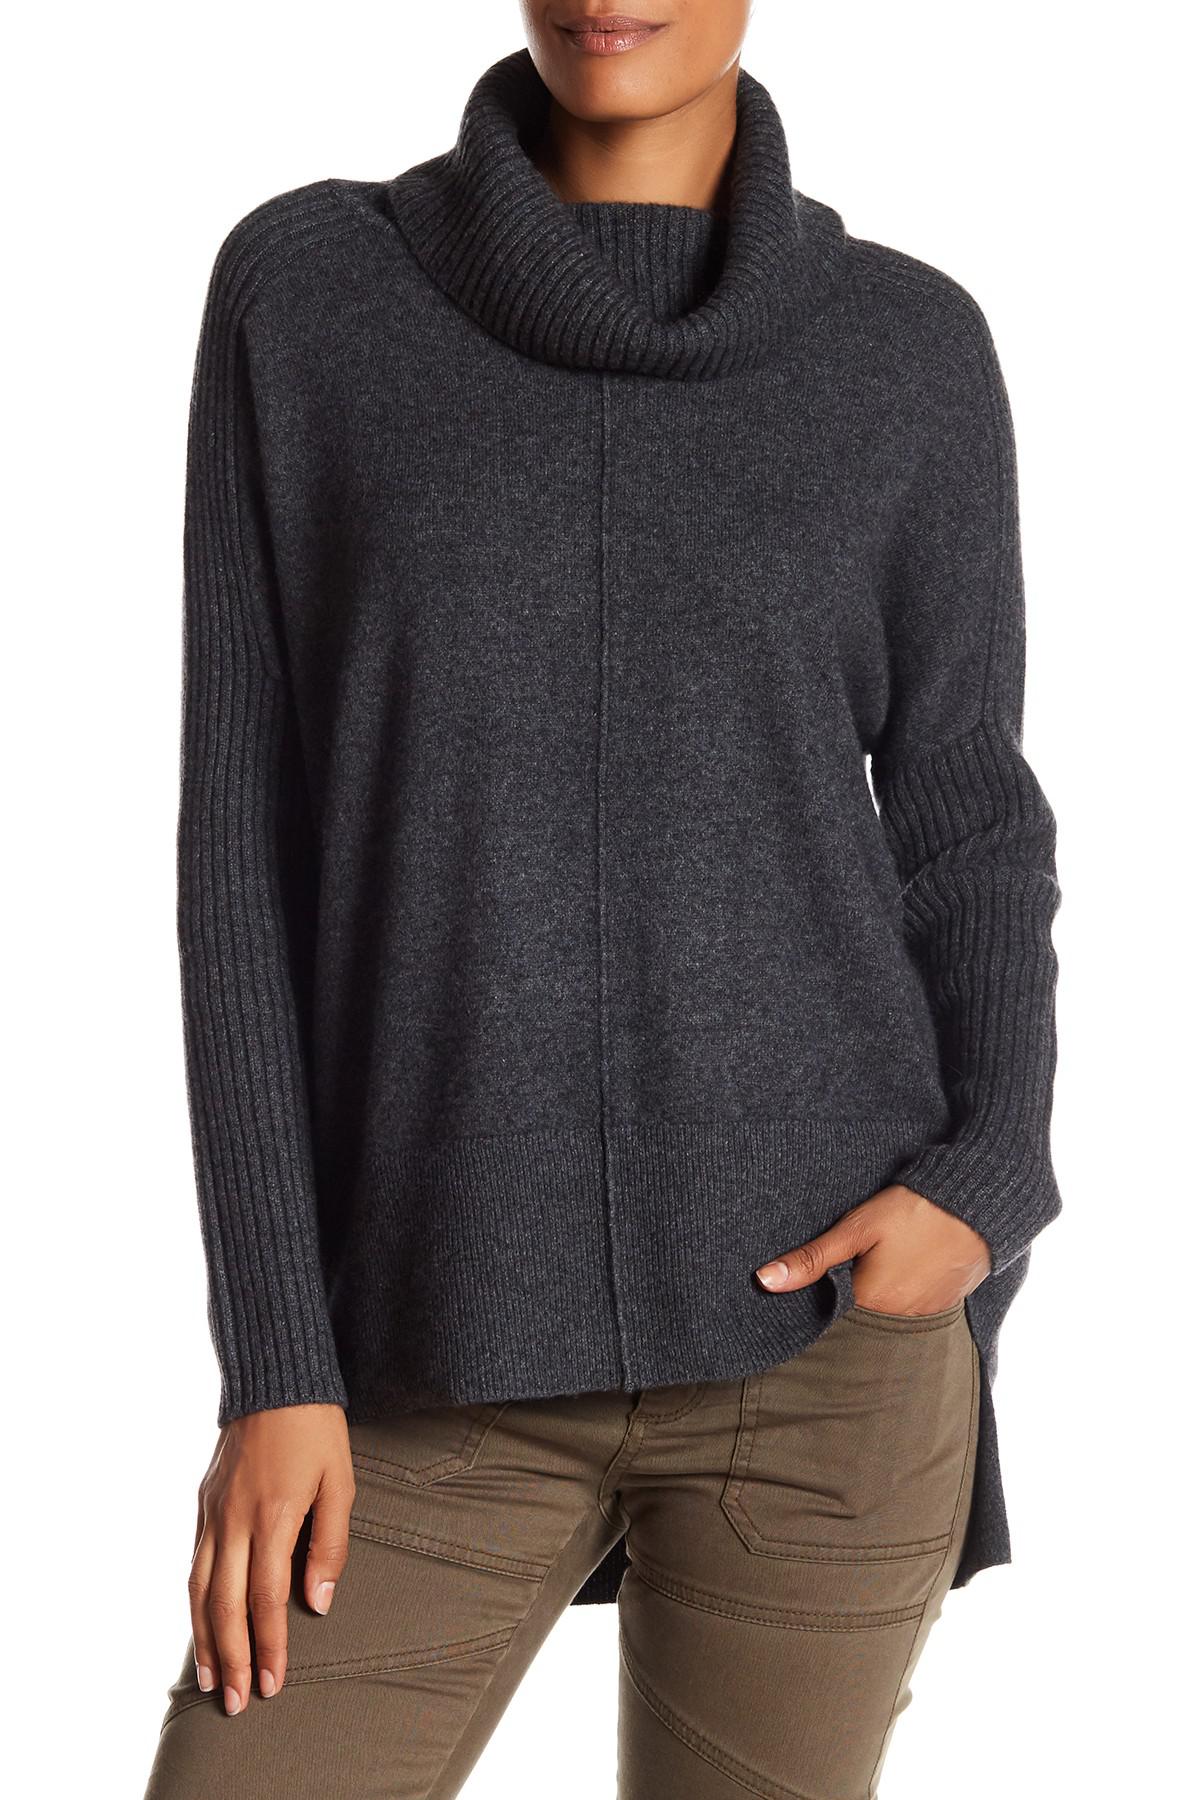 Lyst - Philosophy Cashmere Oversized Turtleneck Cashmere Sweater